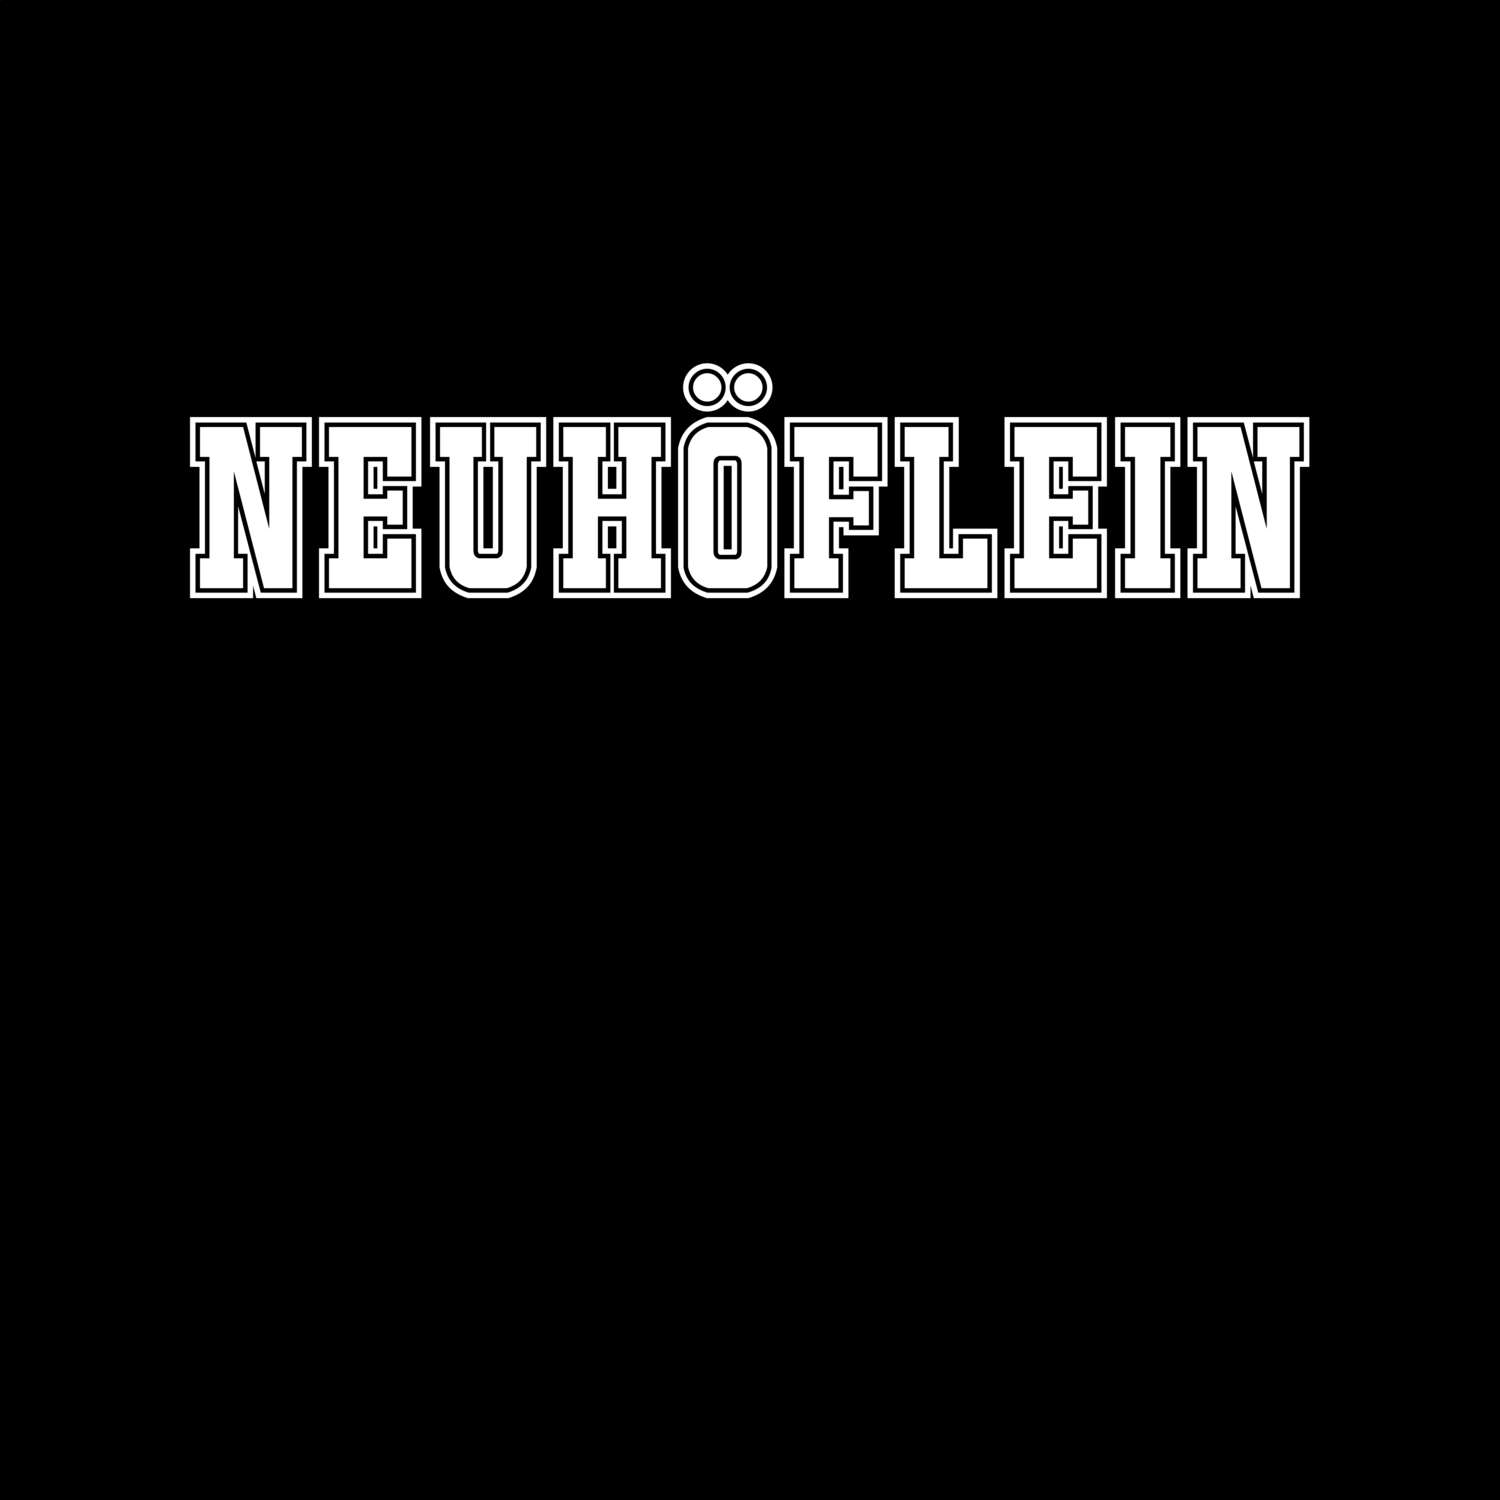 Neuhöflein T-Shirt »Classic«